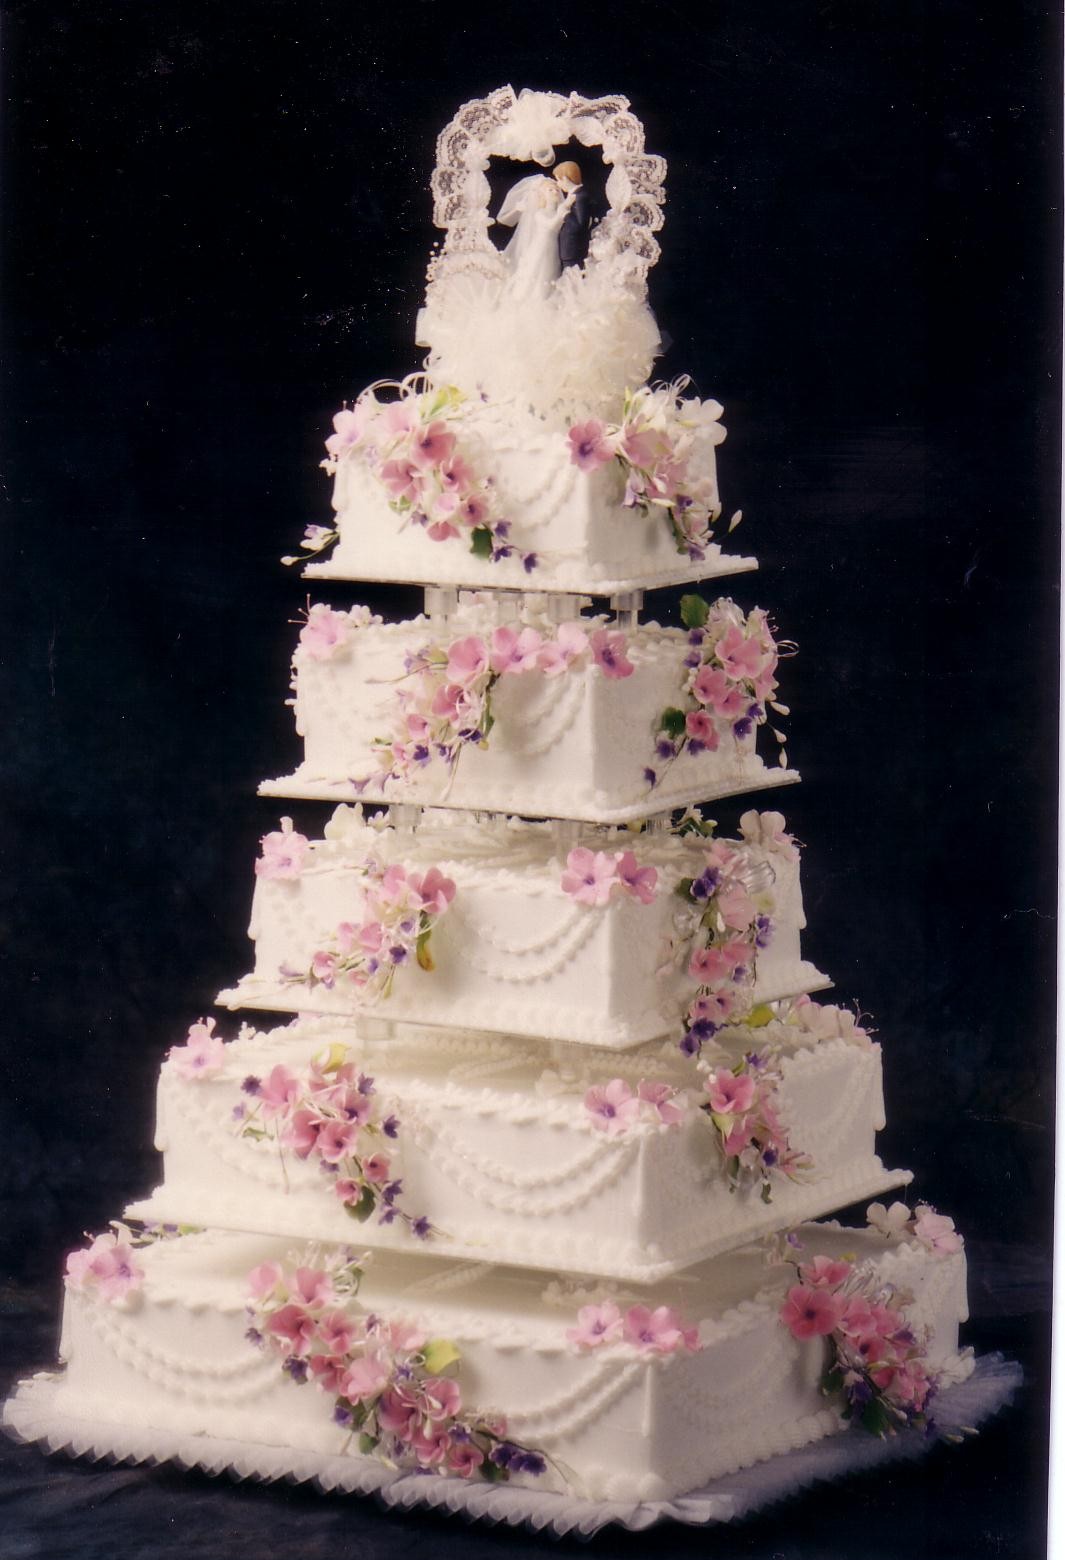 floral wedding cake images Unique Pictures